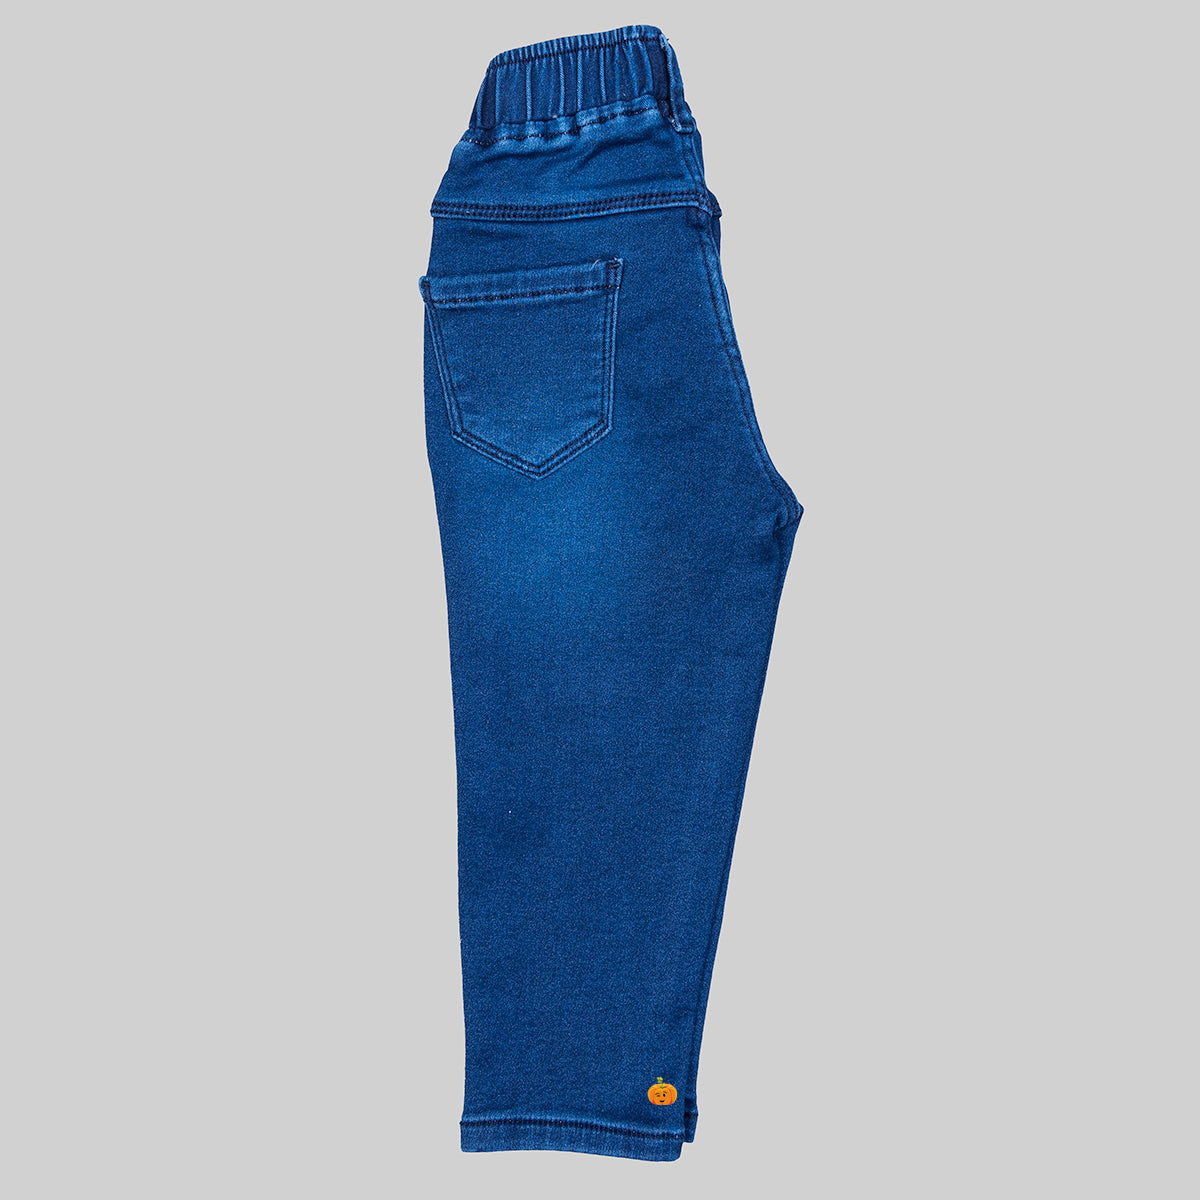 Kids Girls Light Blue Skinny Jeans Denim Ripped Stylish Stretchy Pants  Jeggings | eBay